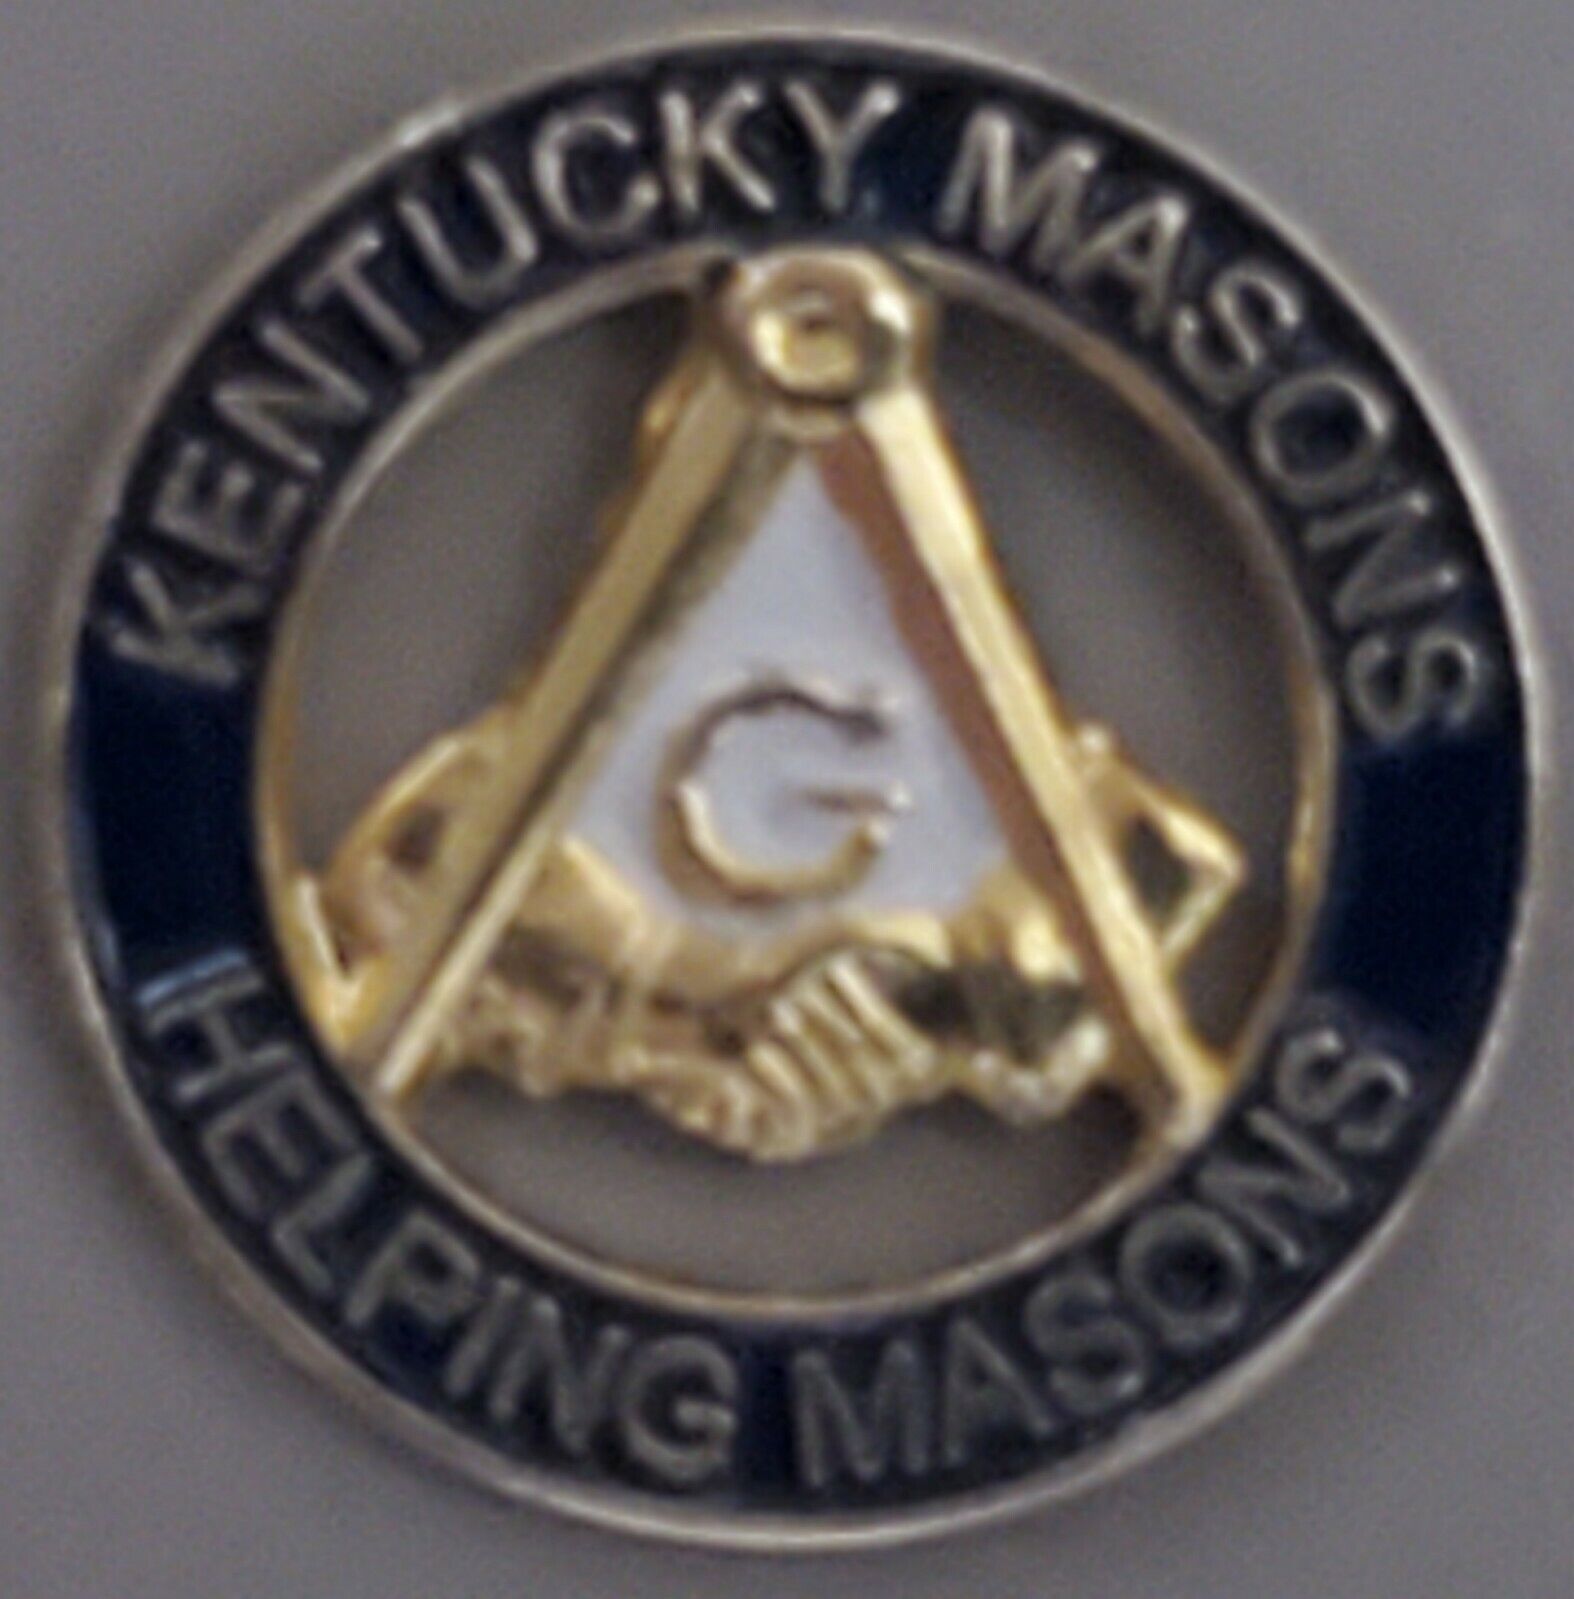 Kentucky Masons Helping Masons Square & Compass handshake Masonic Lapel Pin NEW